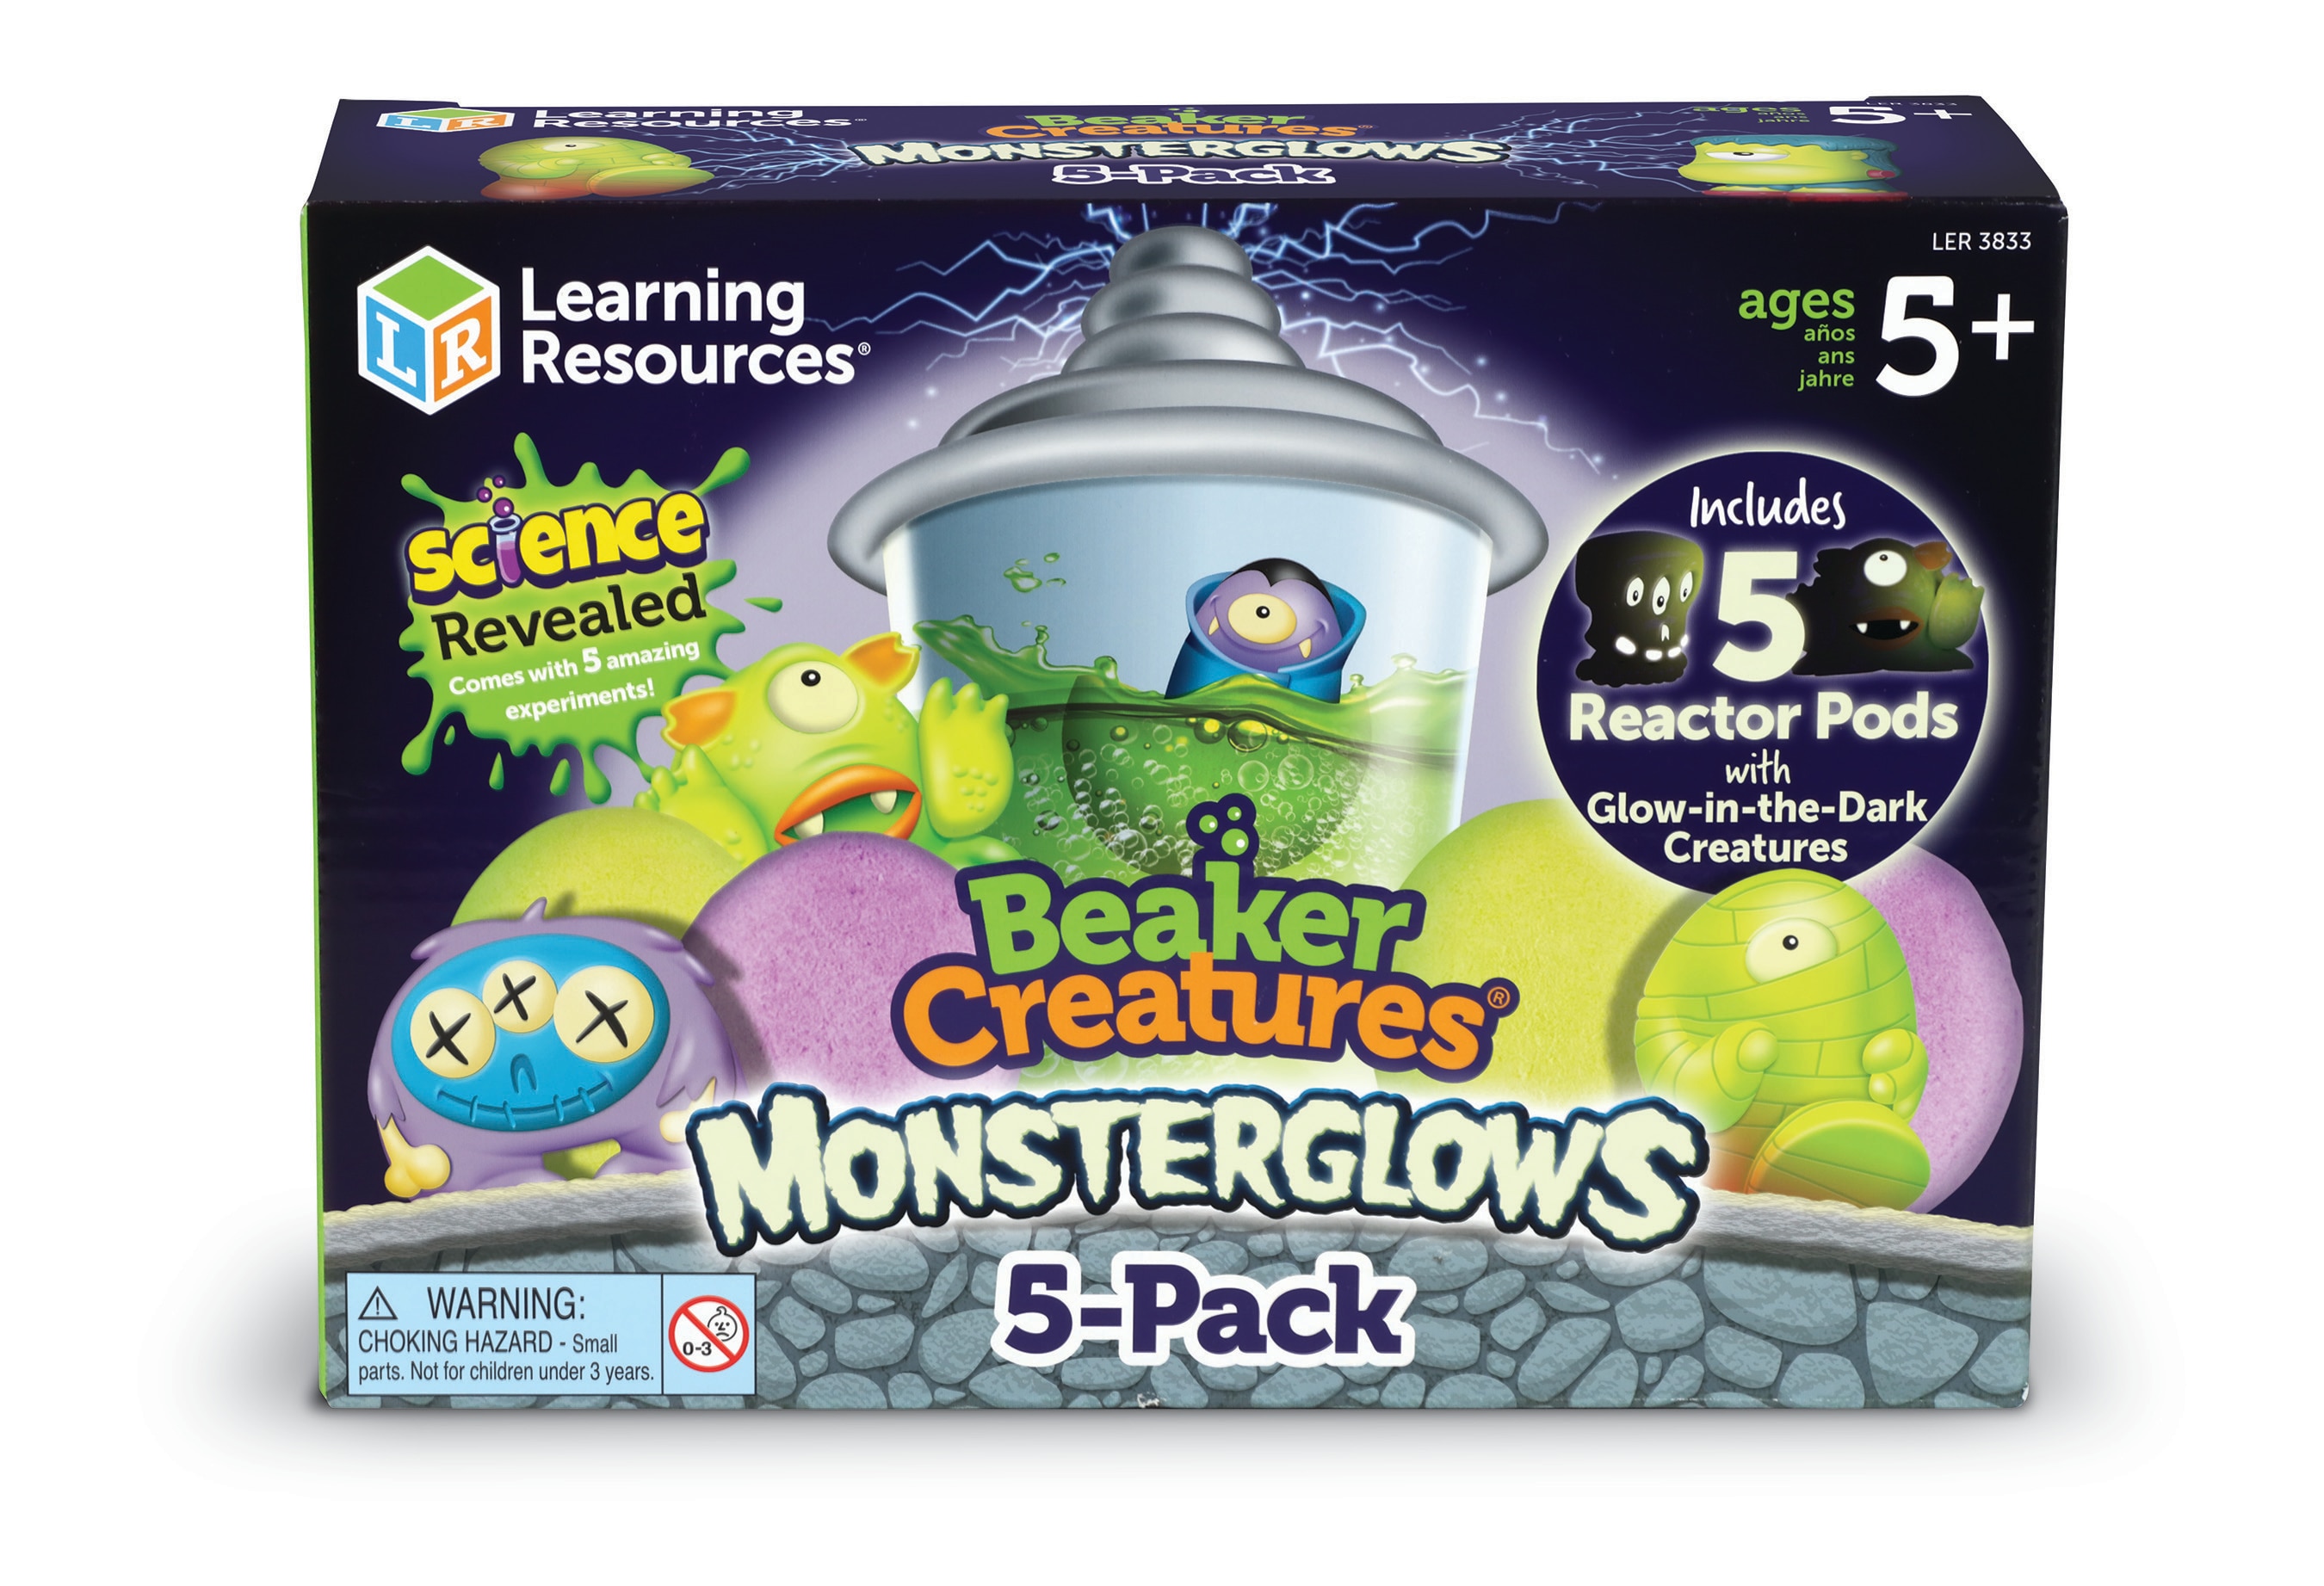 Beaker Creatures(R) Monsterglow 5-pack